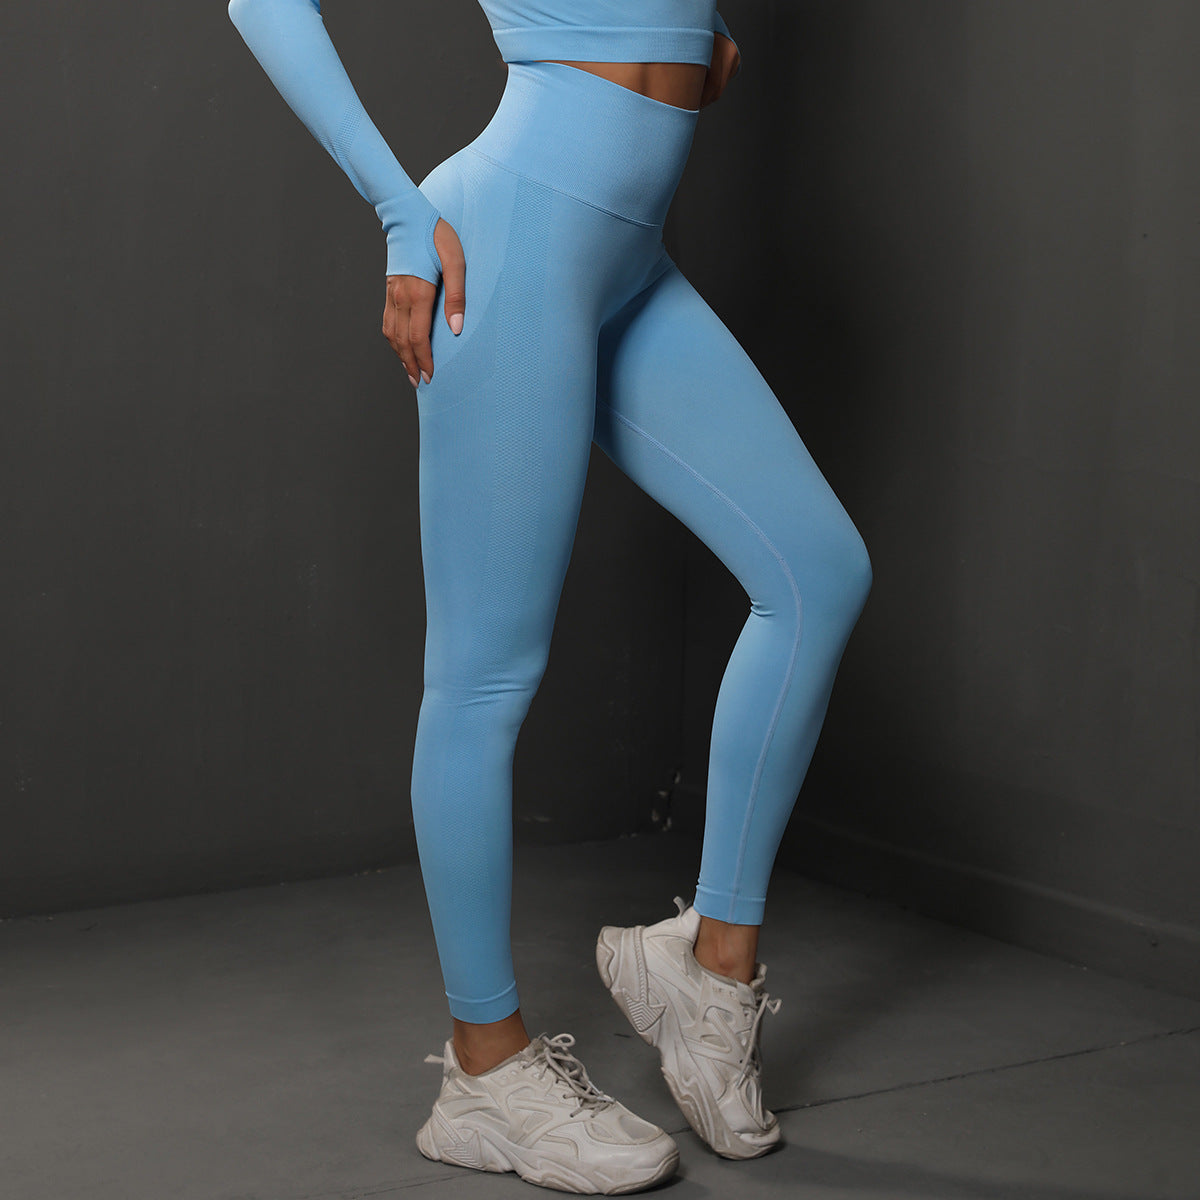 High Waist Seamless Yoga Pants Women's Solid Color Full Length Leggings Fitness Hip Up Running Sport Gym Legging Outfits